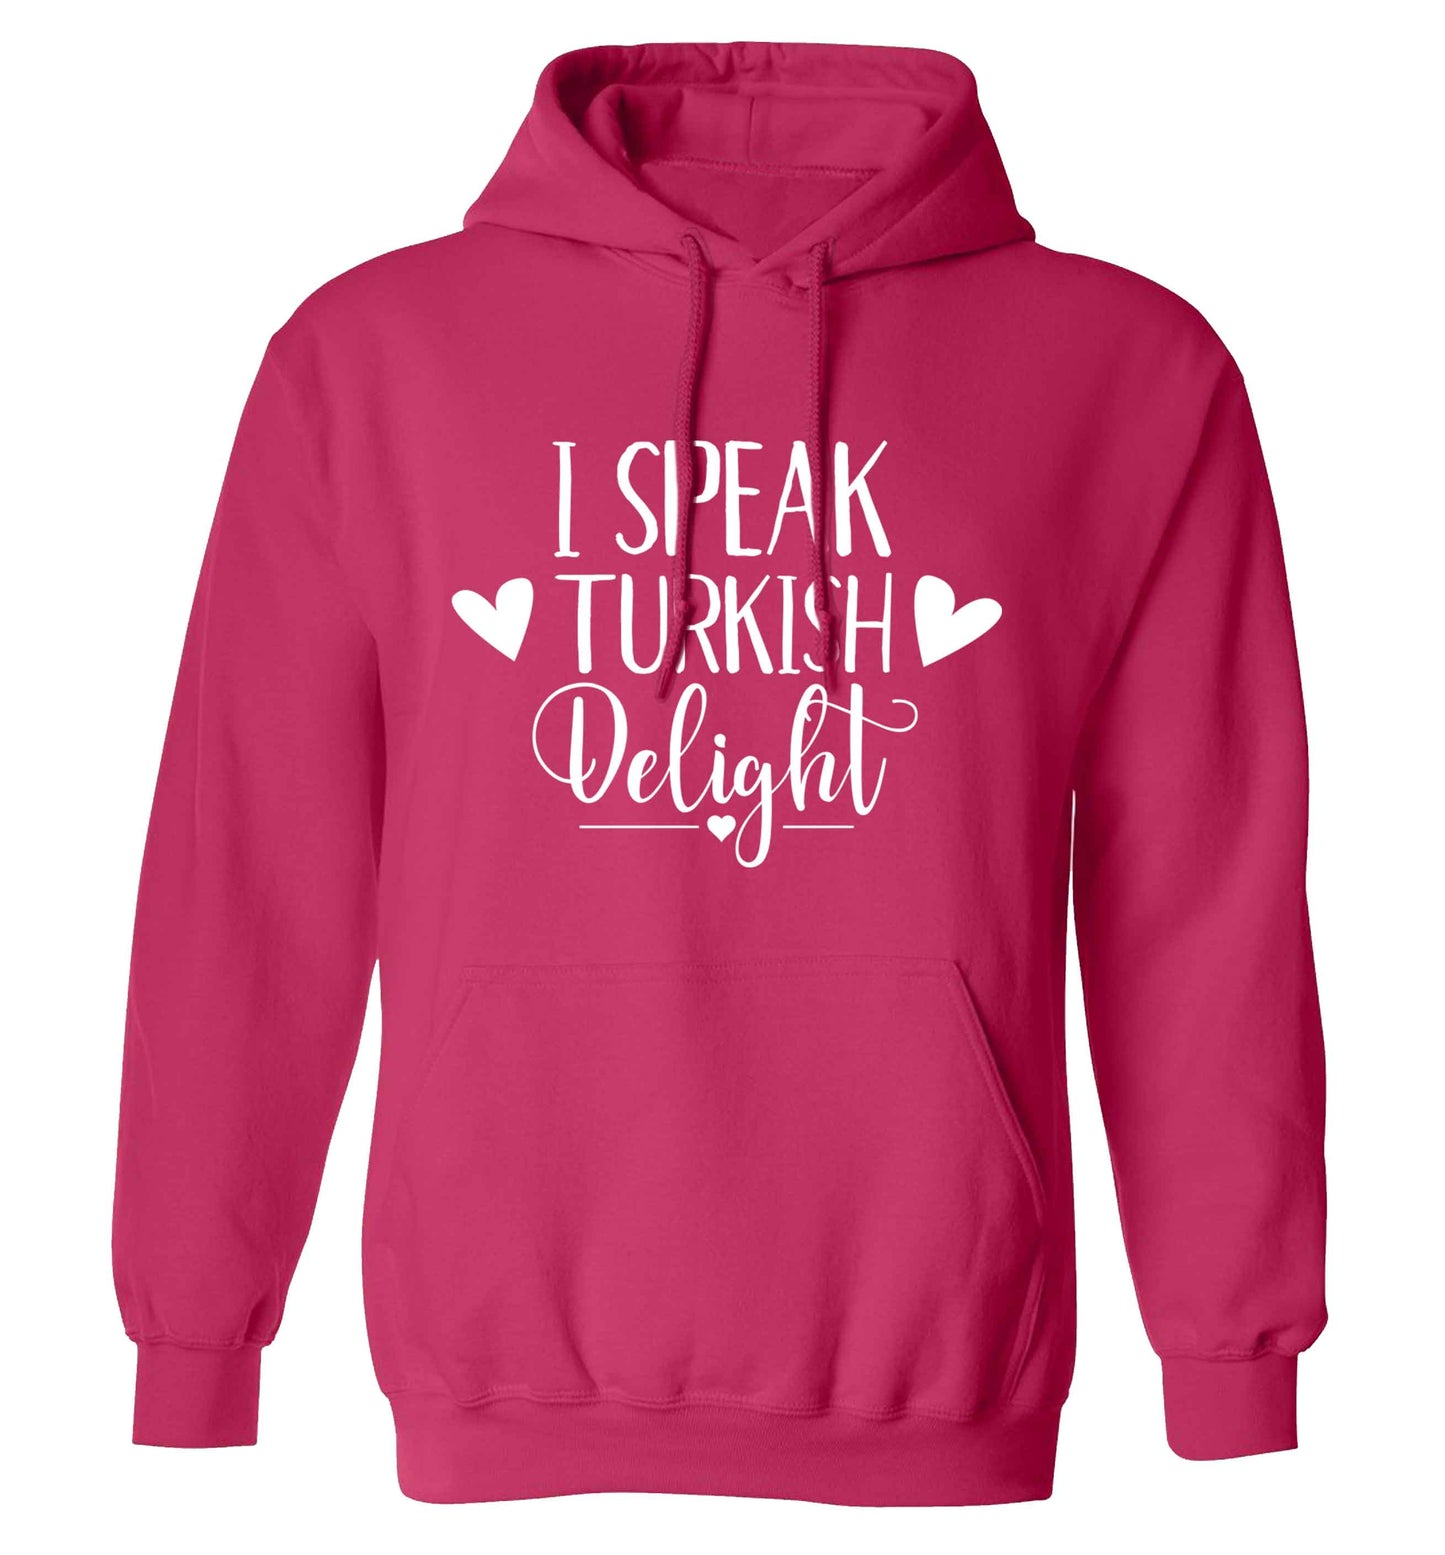 I speak turkish...delight adults unisex pink hoodie 2XL